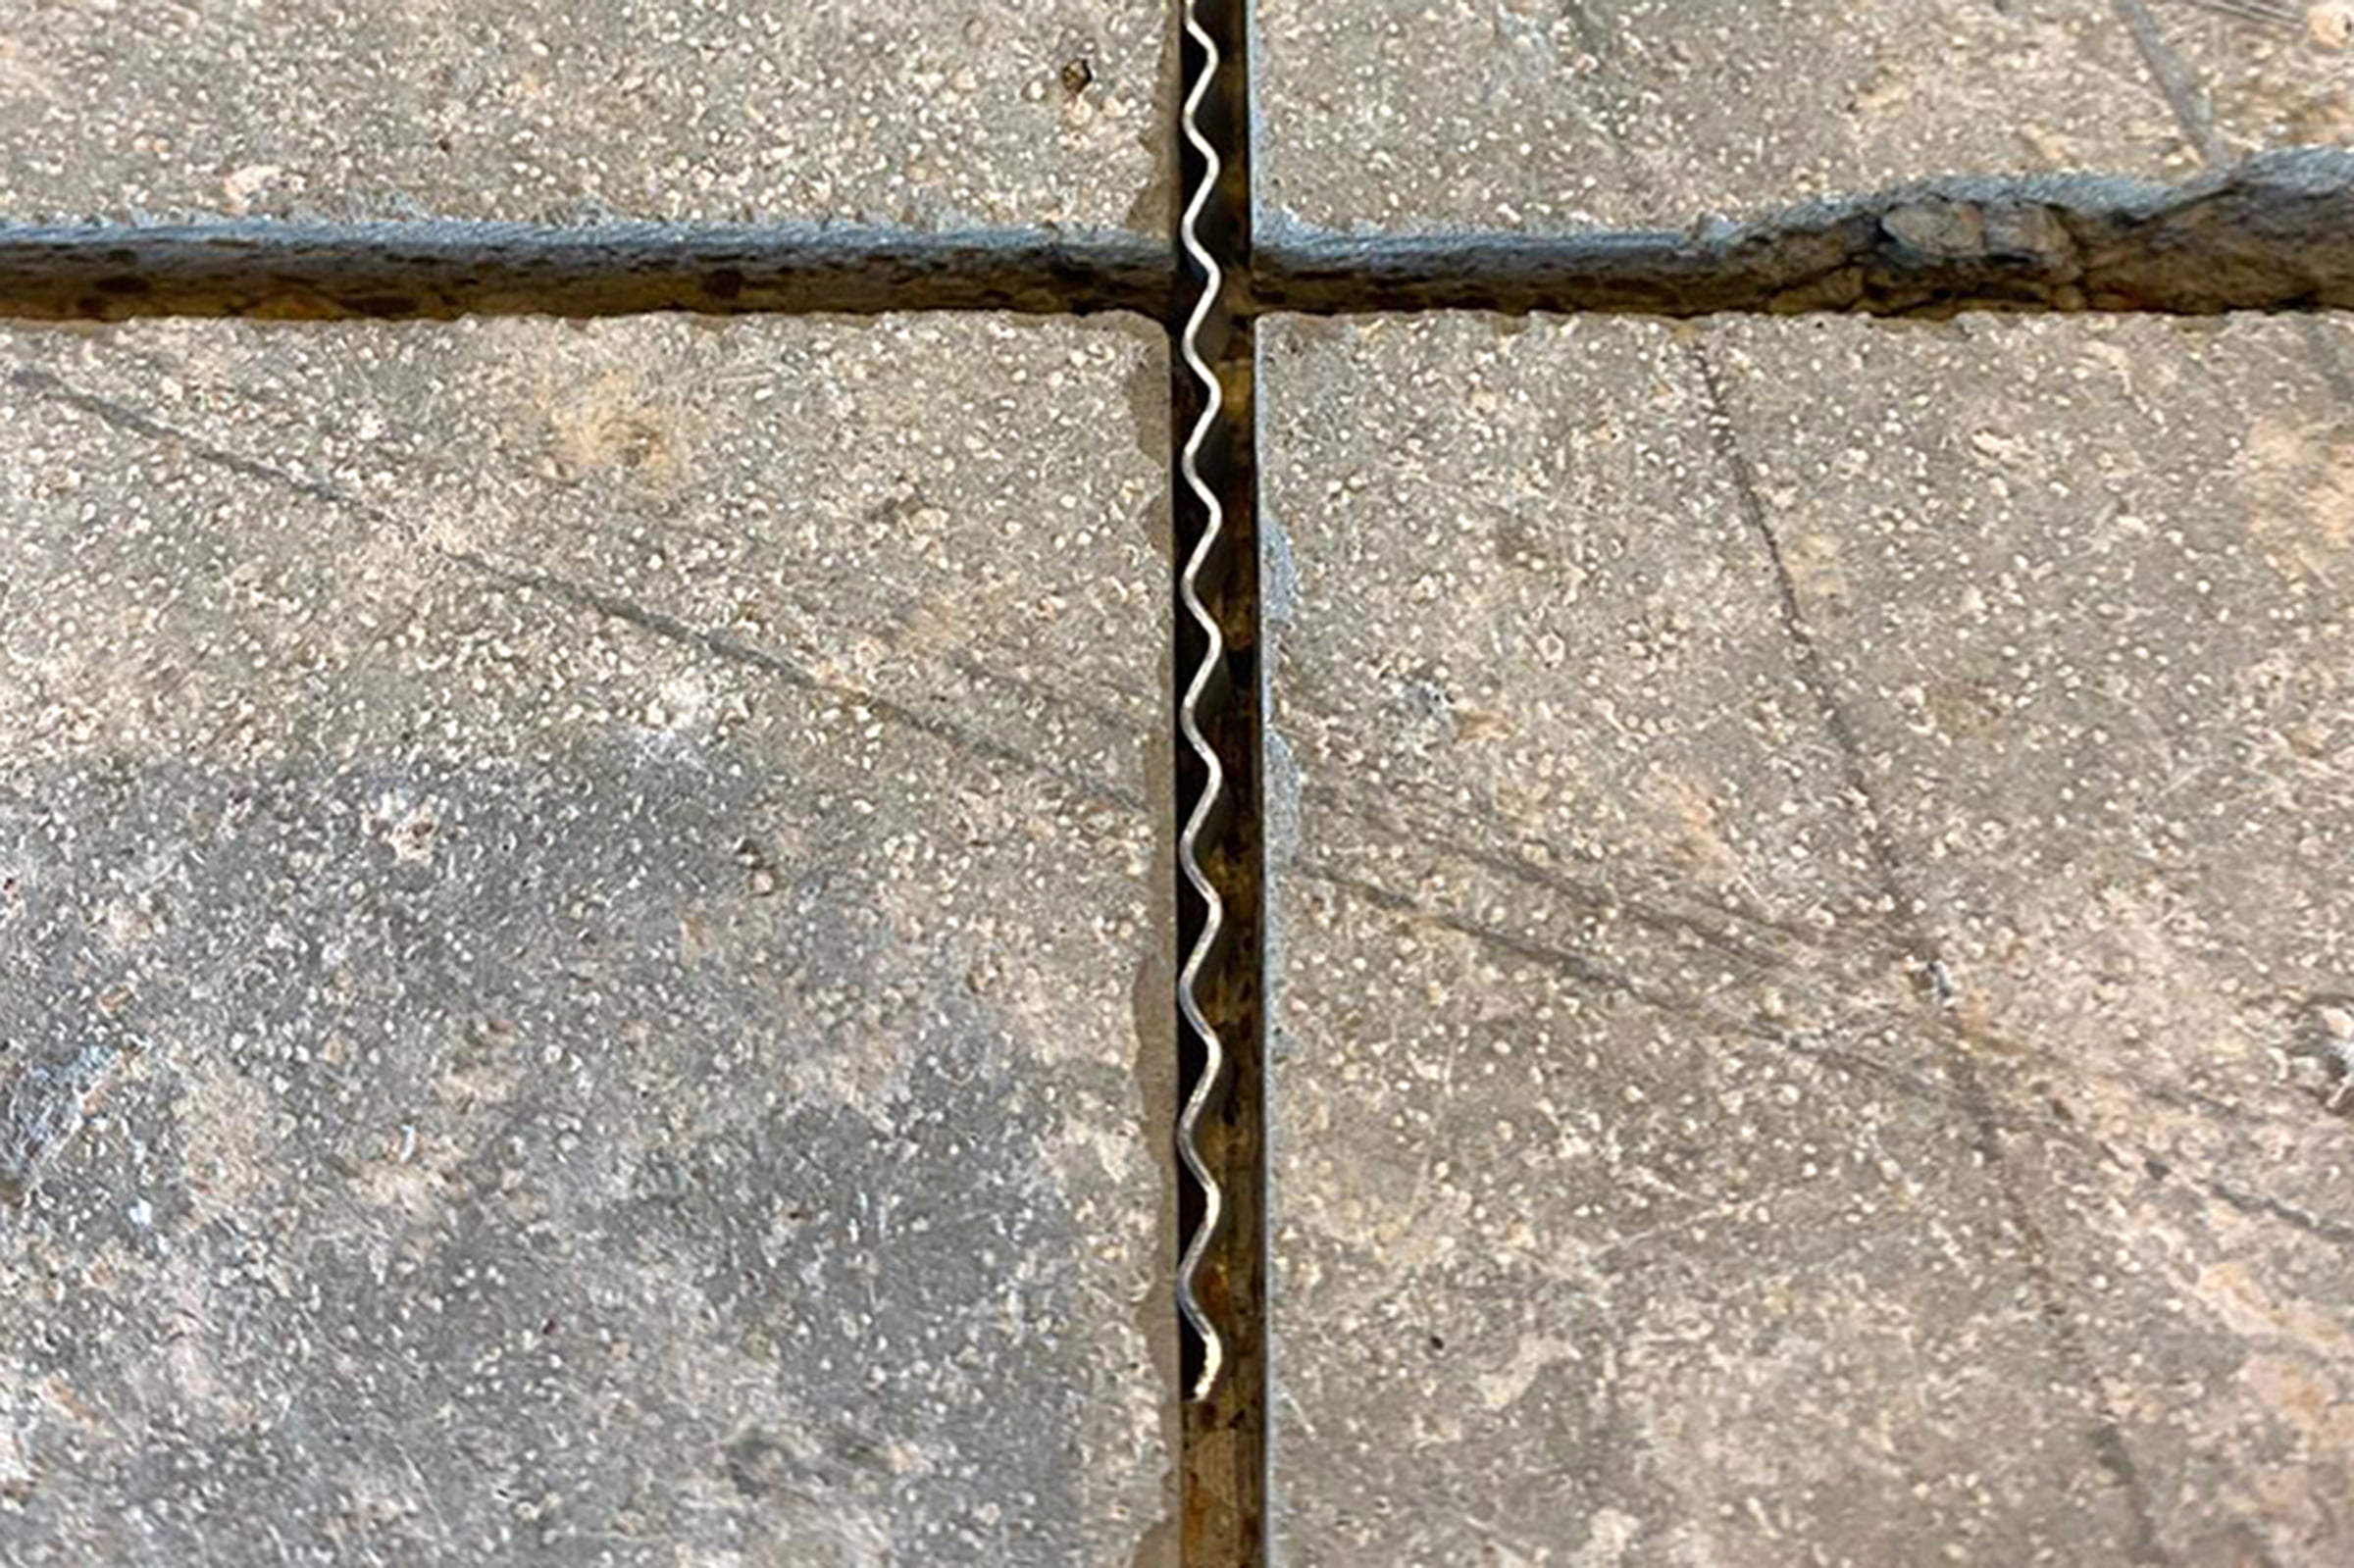 Repairing cracks on an industrial concrete floor